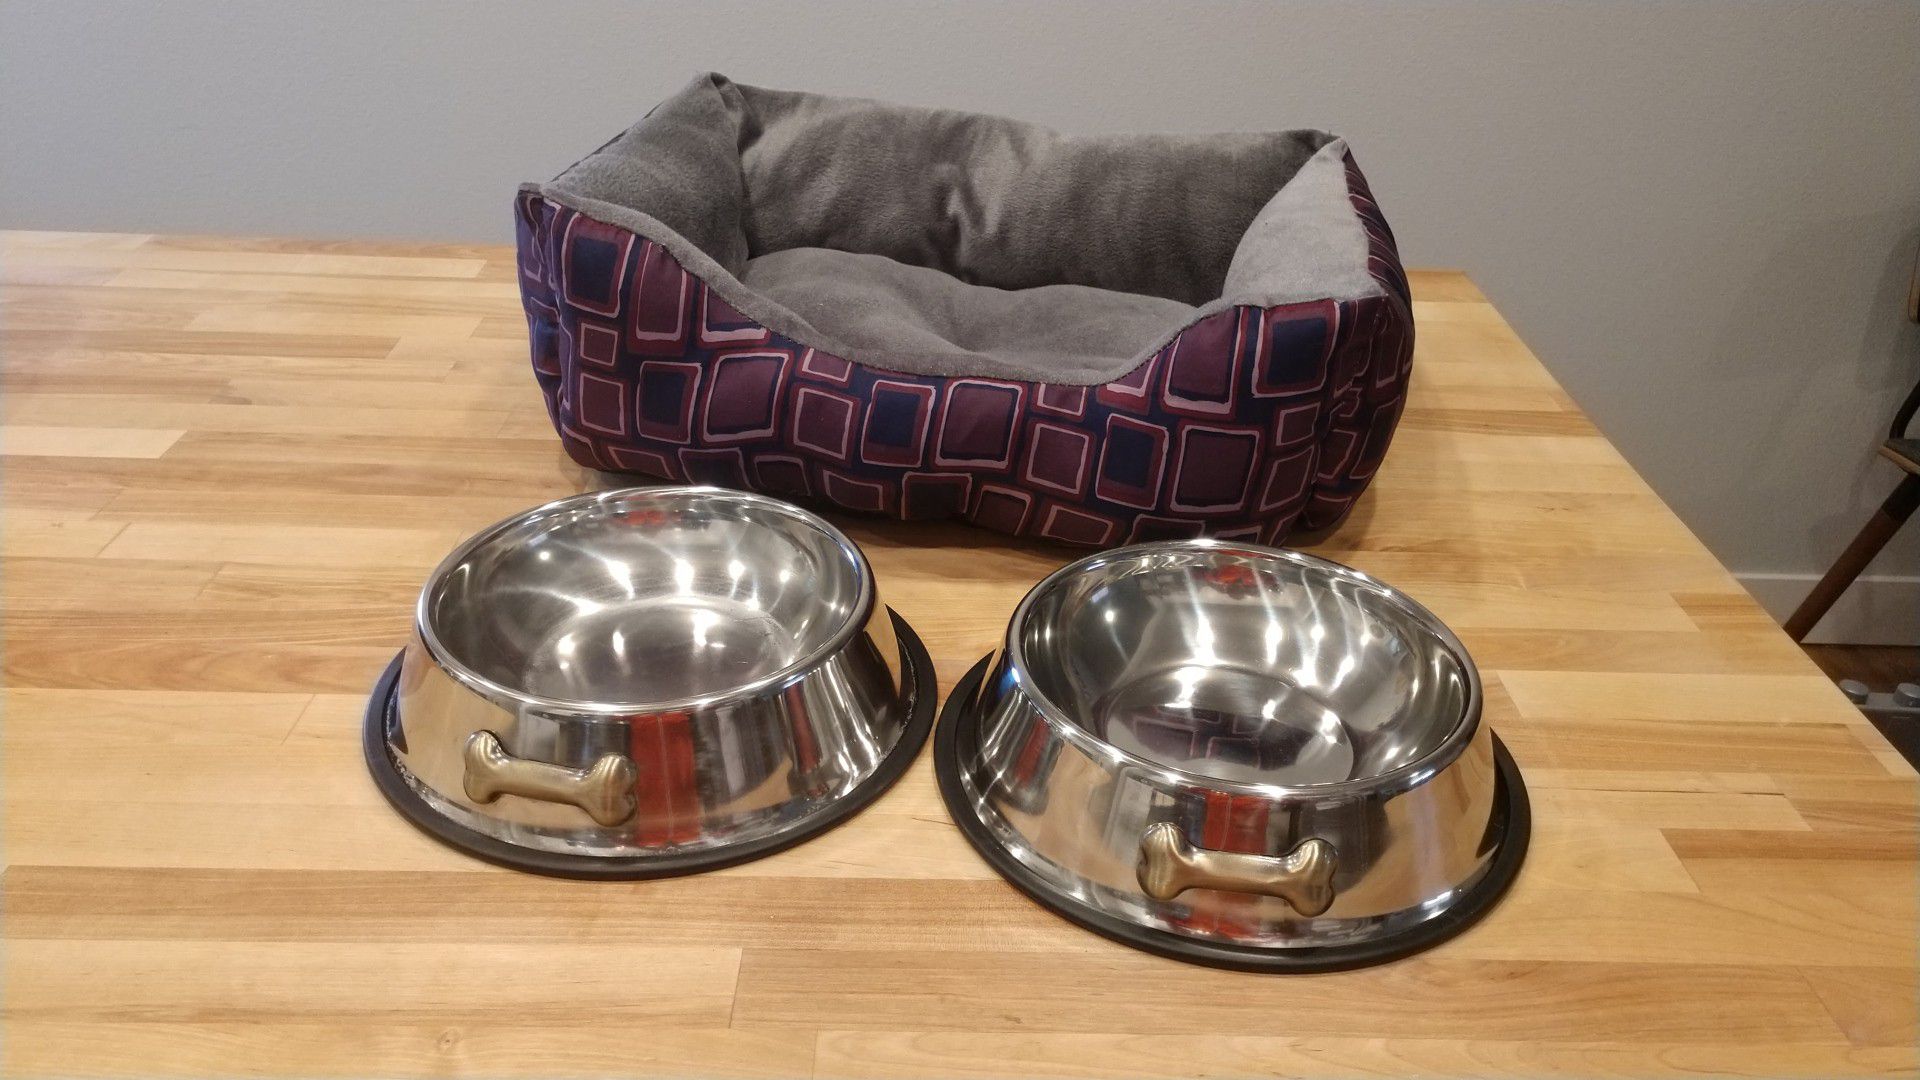 Dog bed and bowls